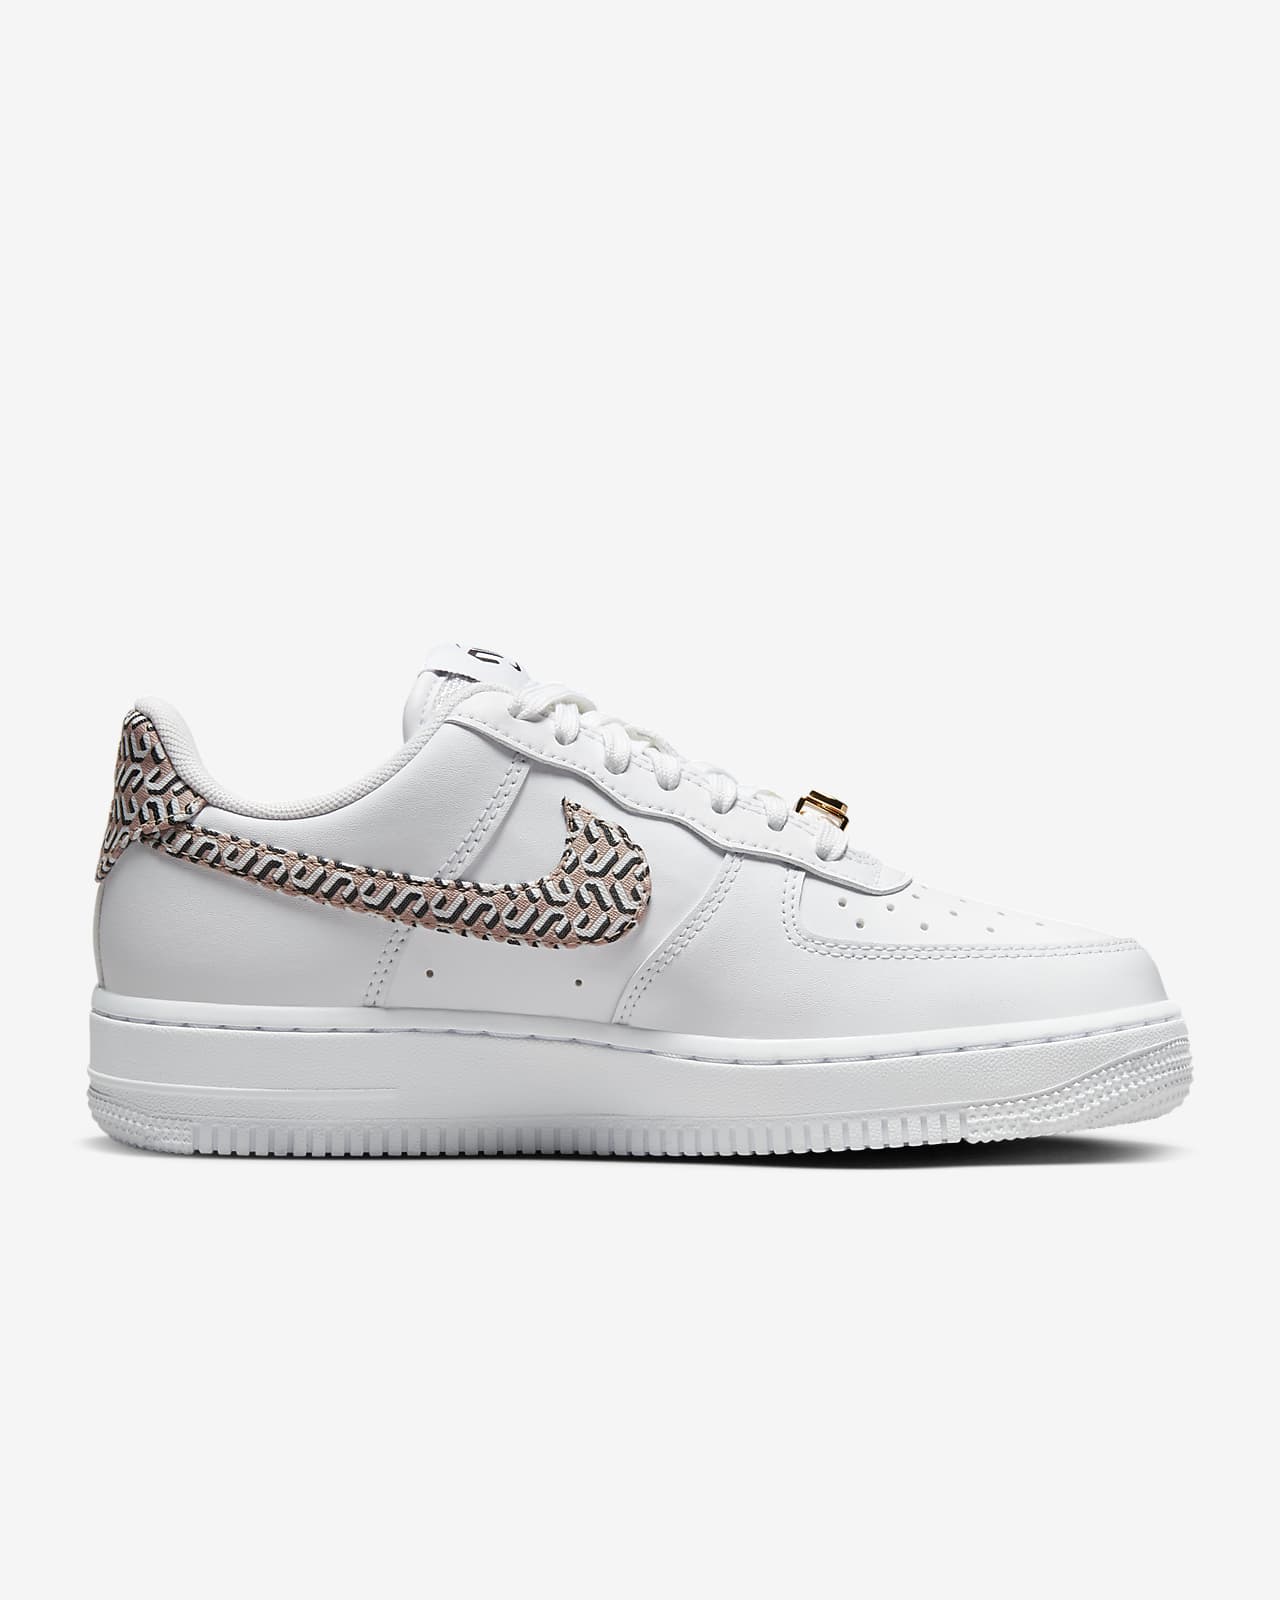 Nike Air Force 1 LX Summit White/Hemp/Black Women's Shoes, Size: 8.5